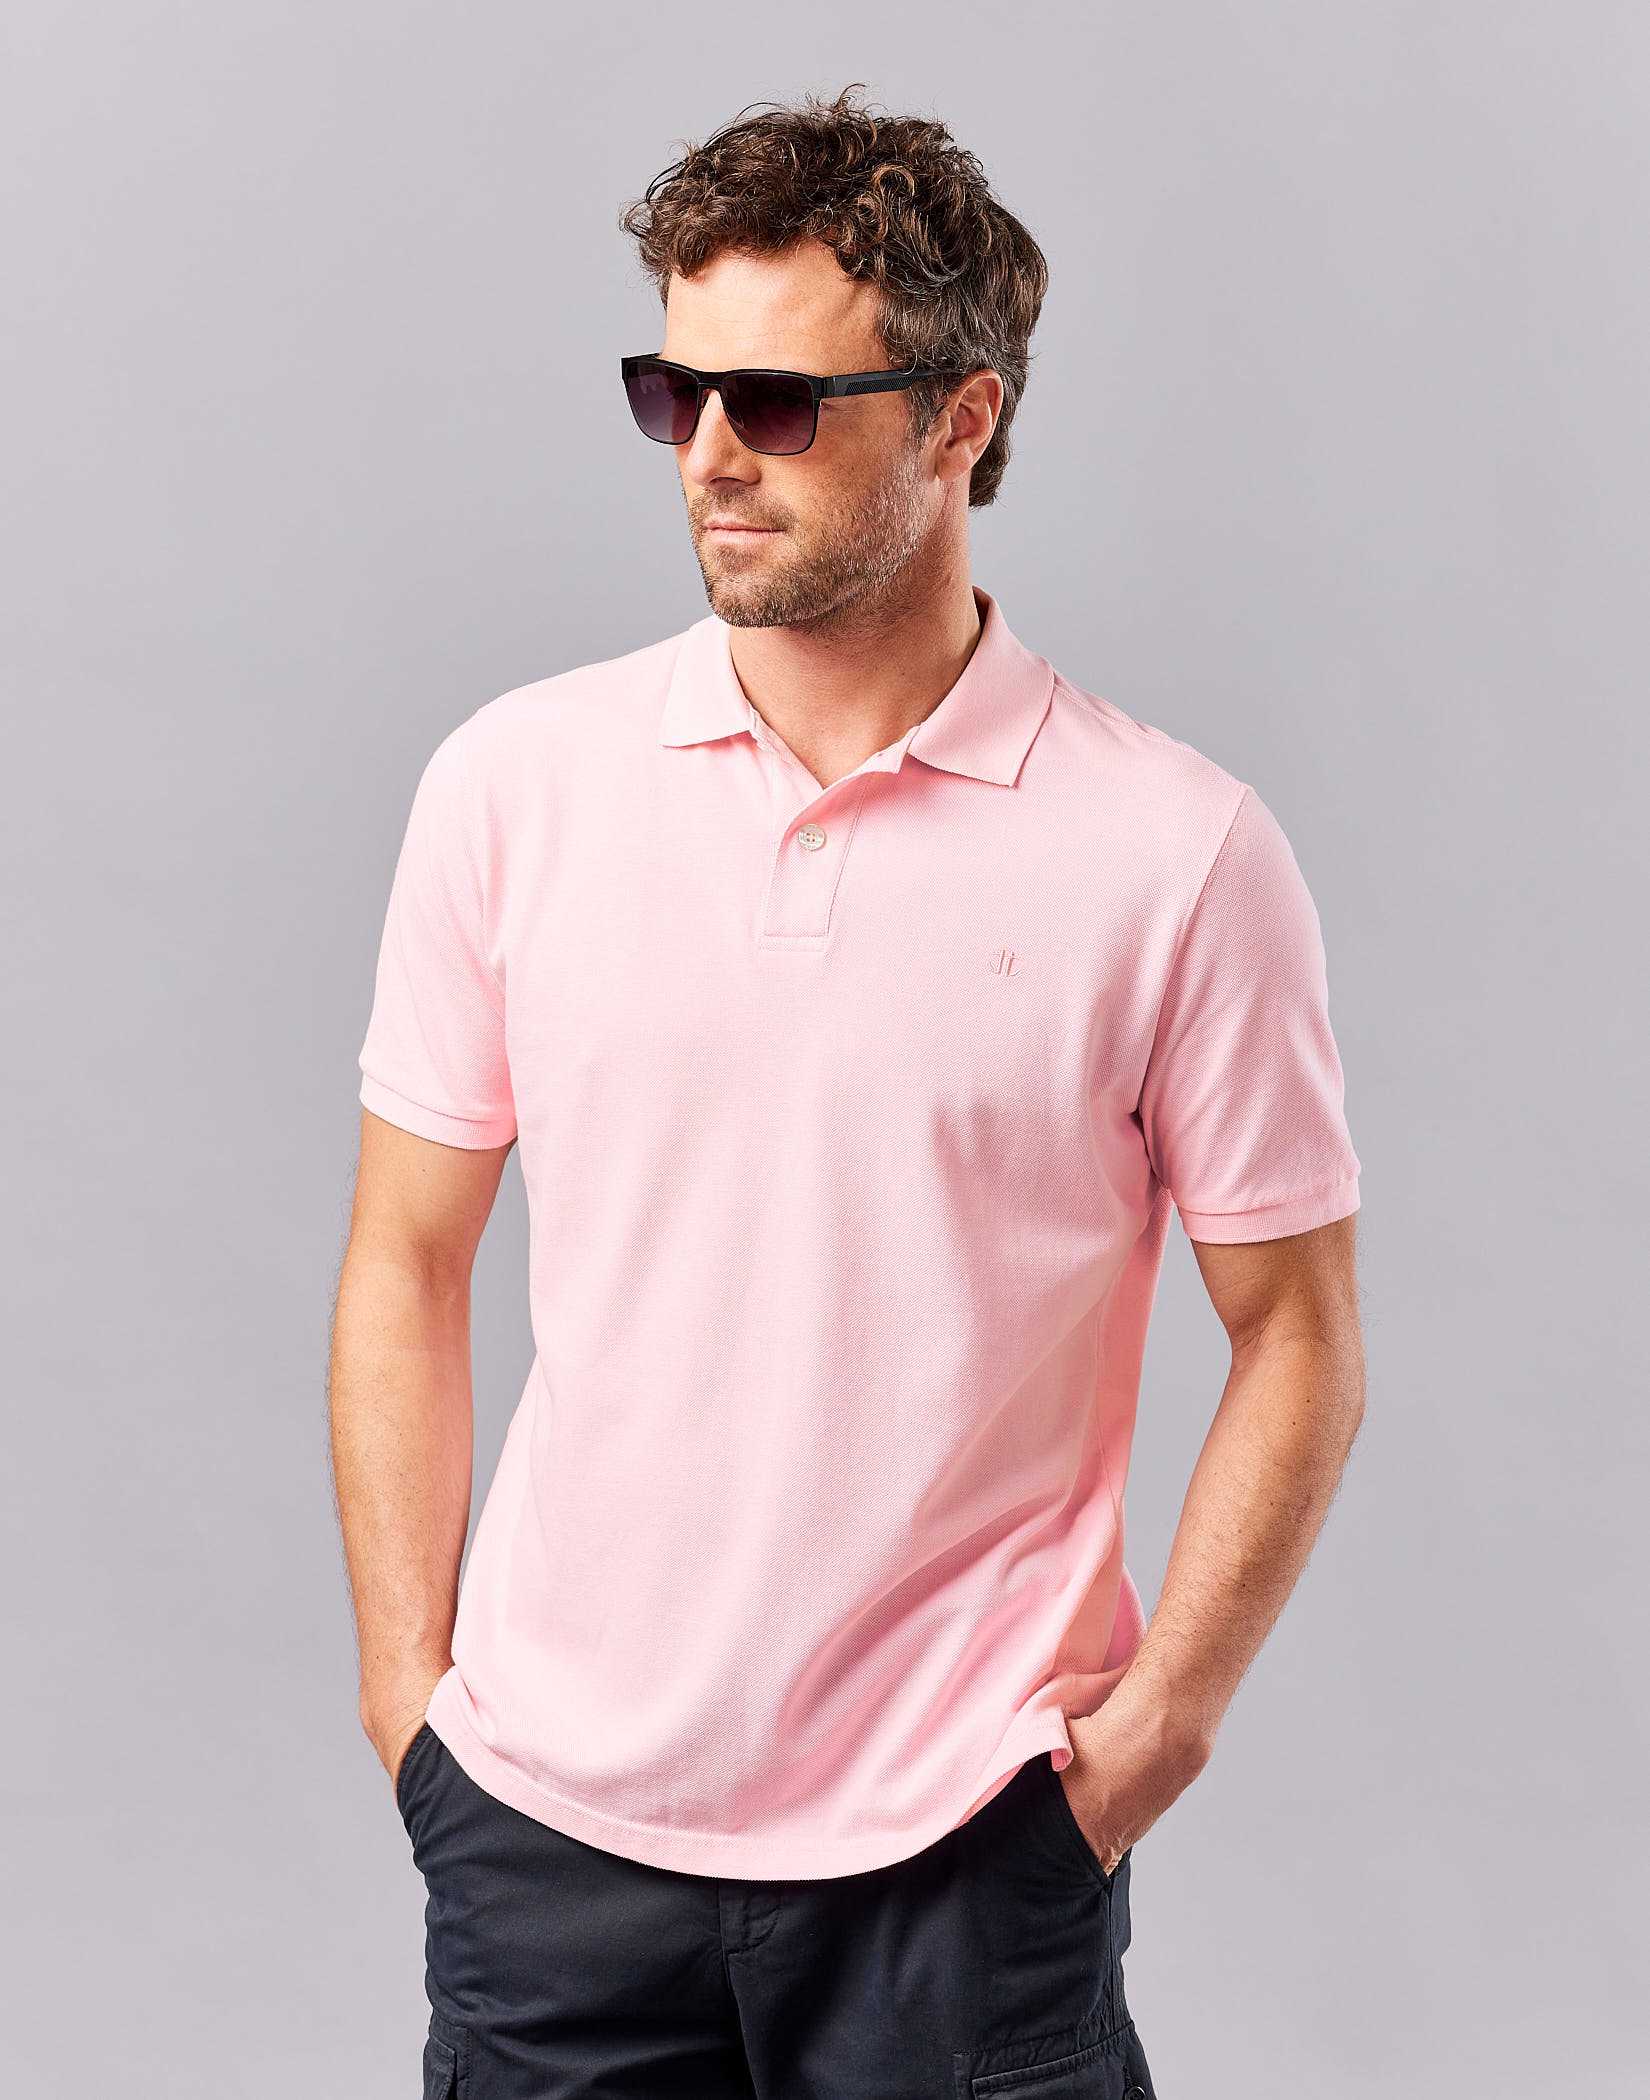 Joseph Turner Men's Pique Polo Shirt - Pink S